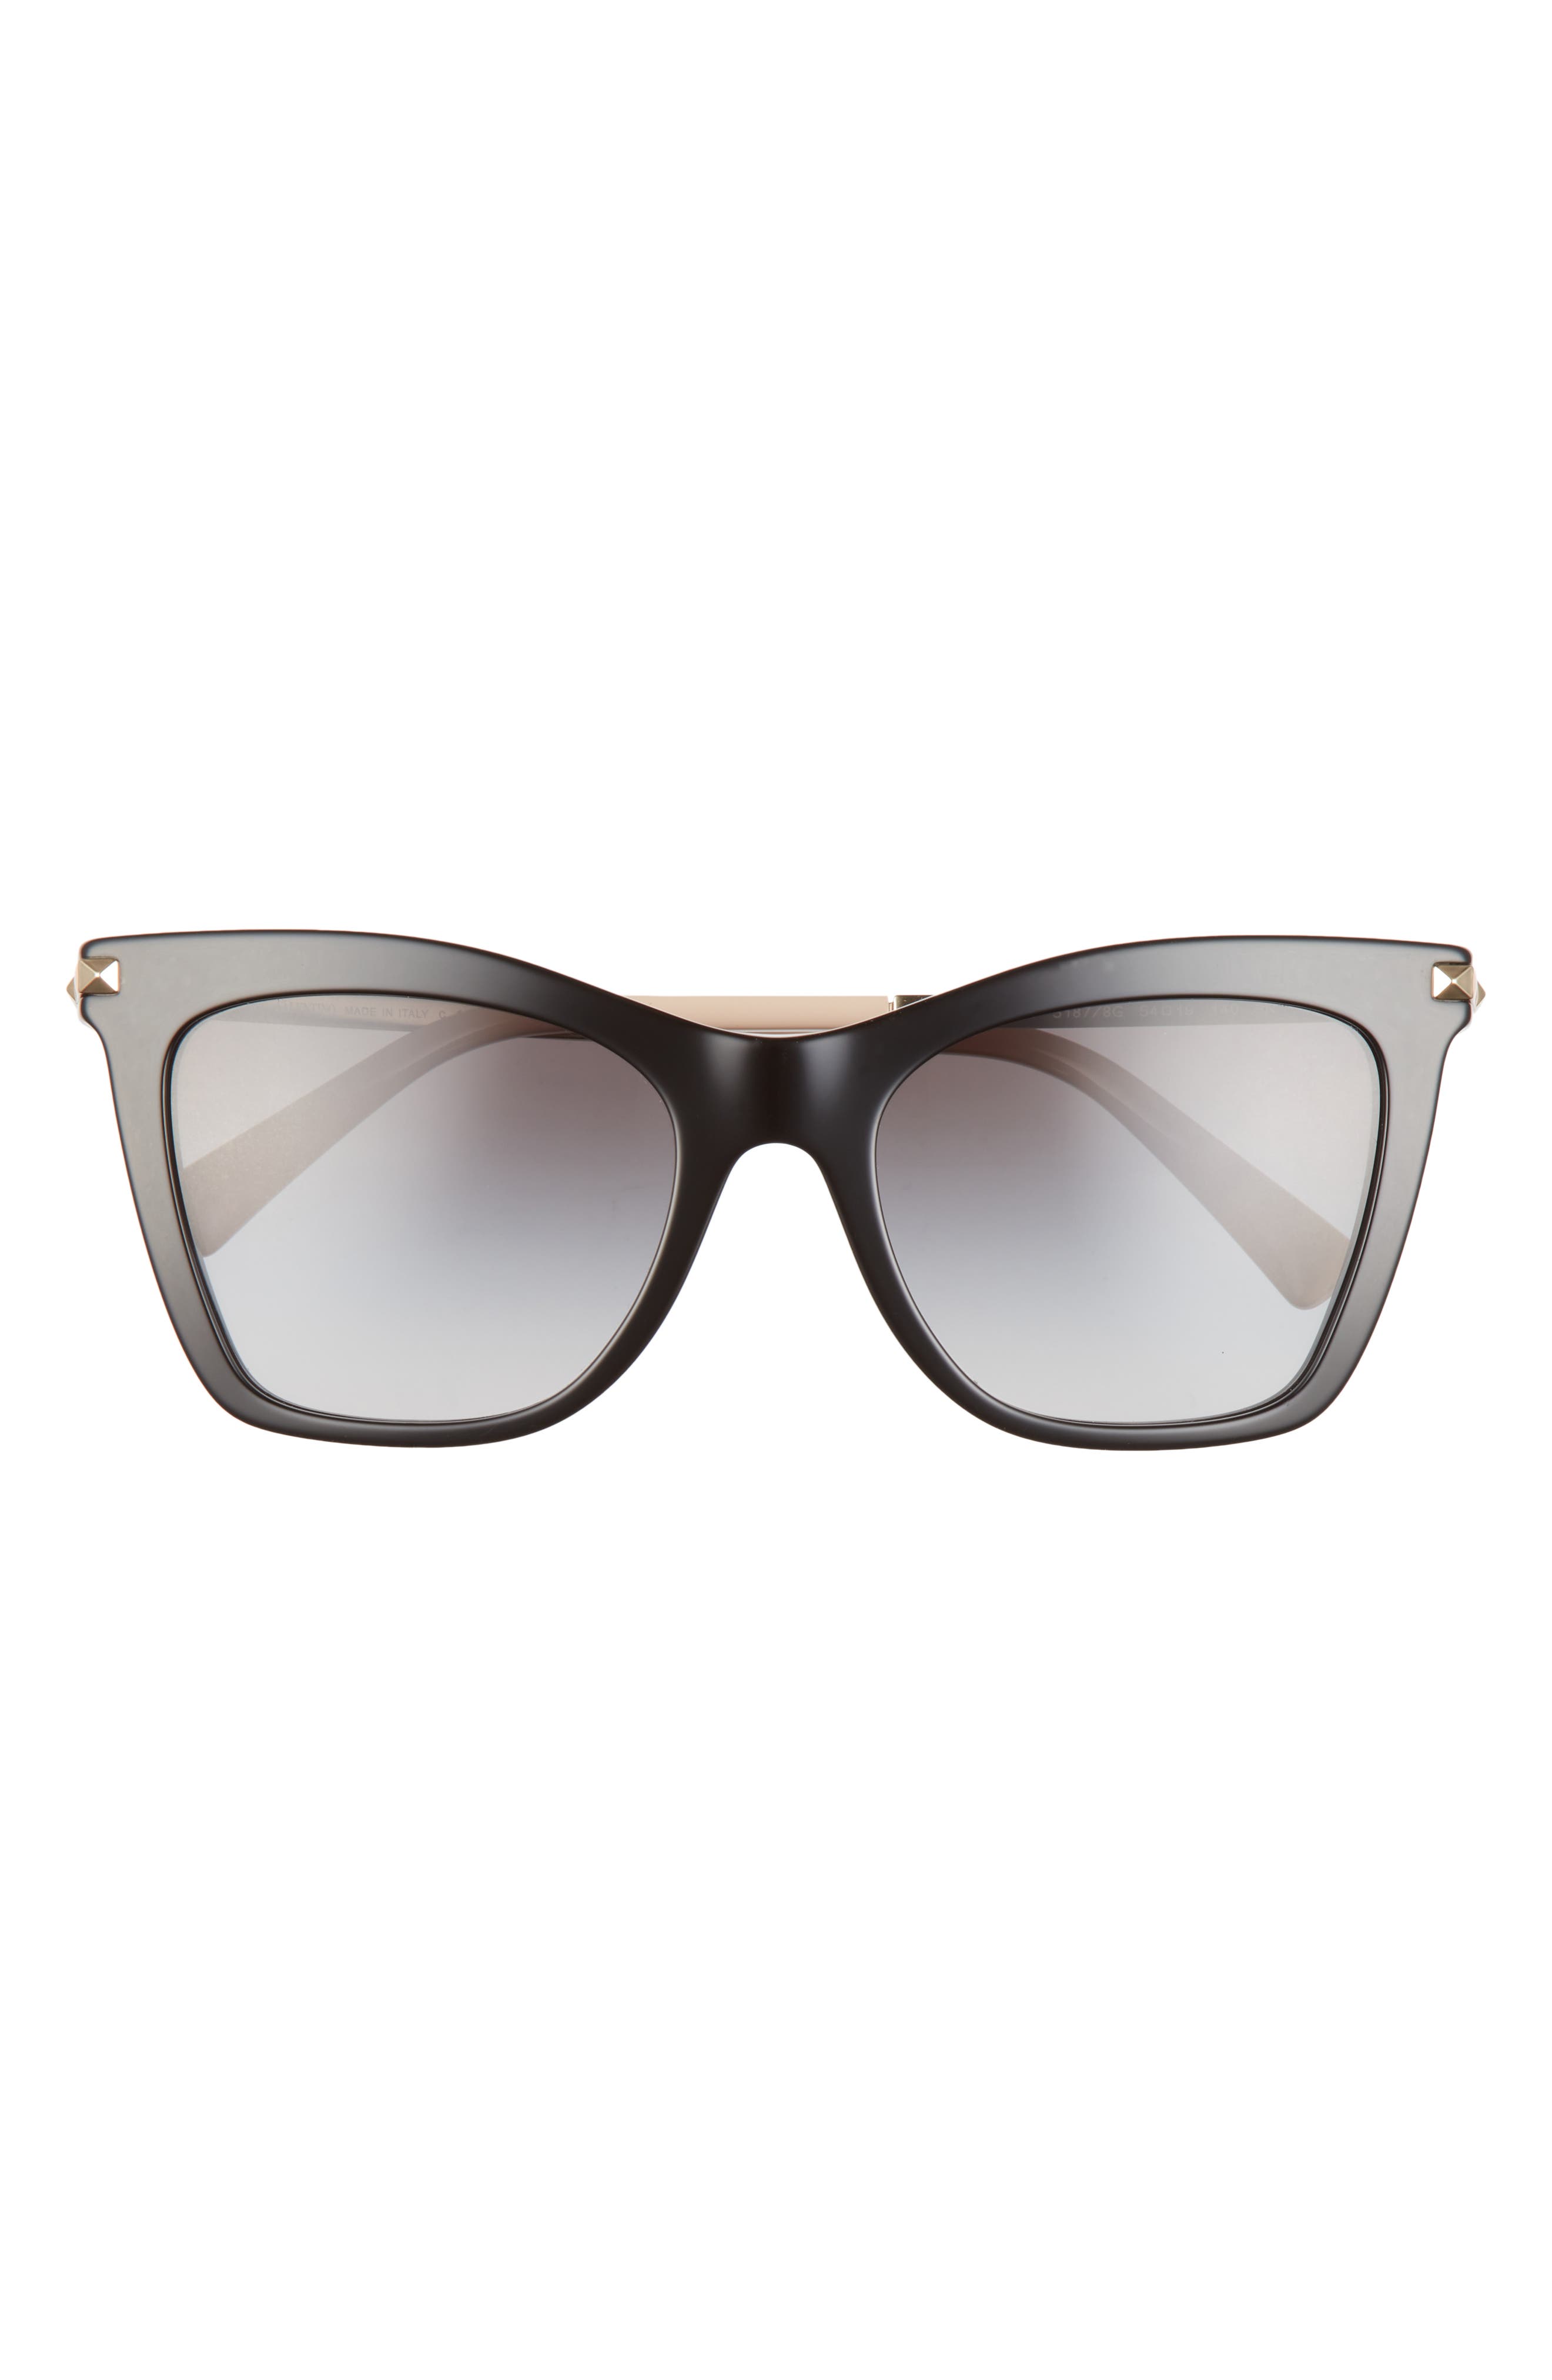 Valentino 54mm Cat Eye Sunglasses in Black/Gradient Smoke at Nordstrom